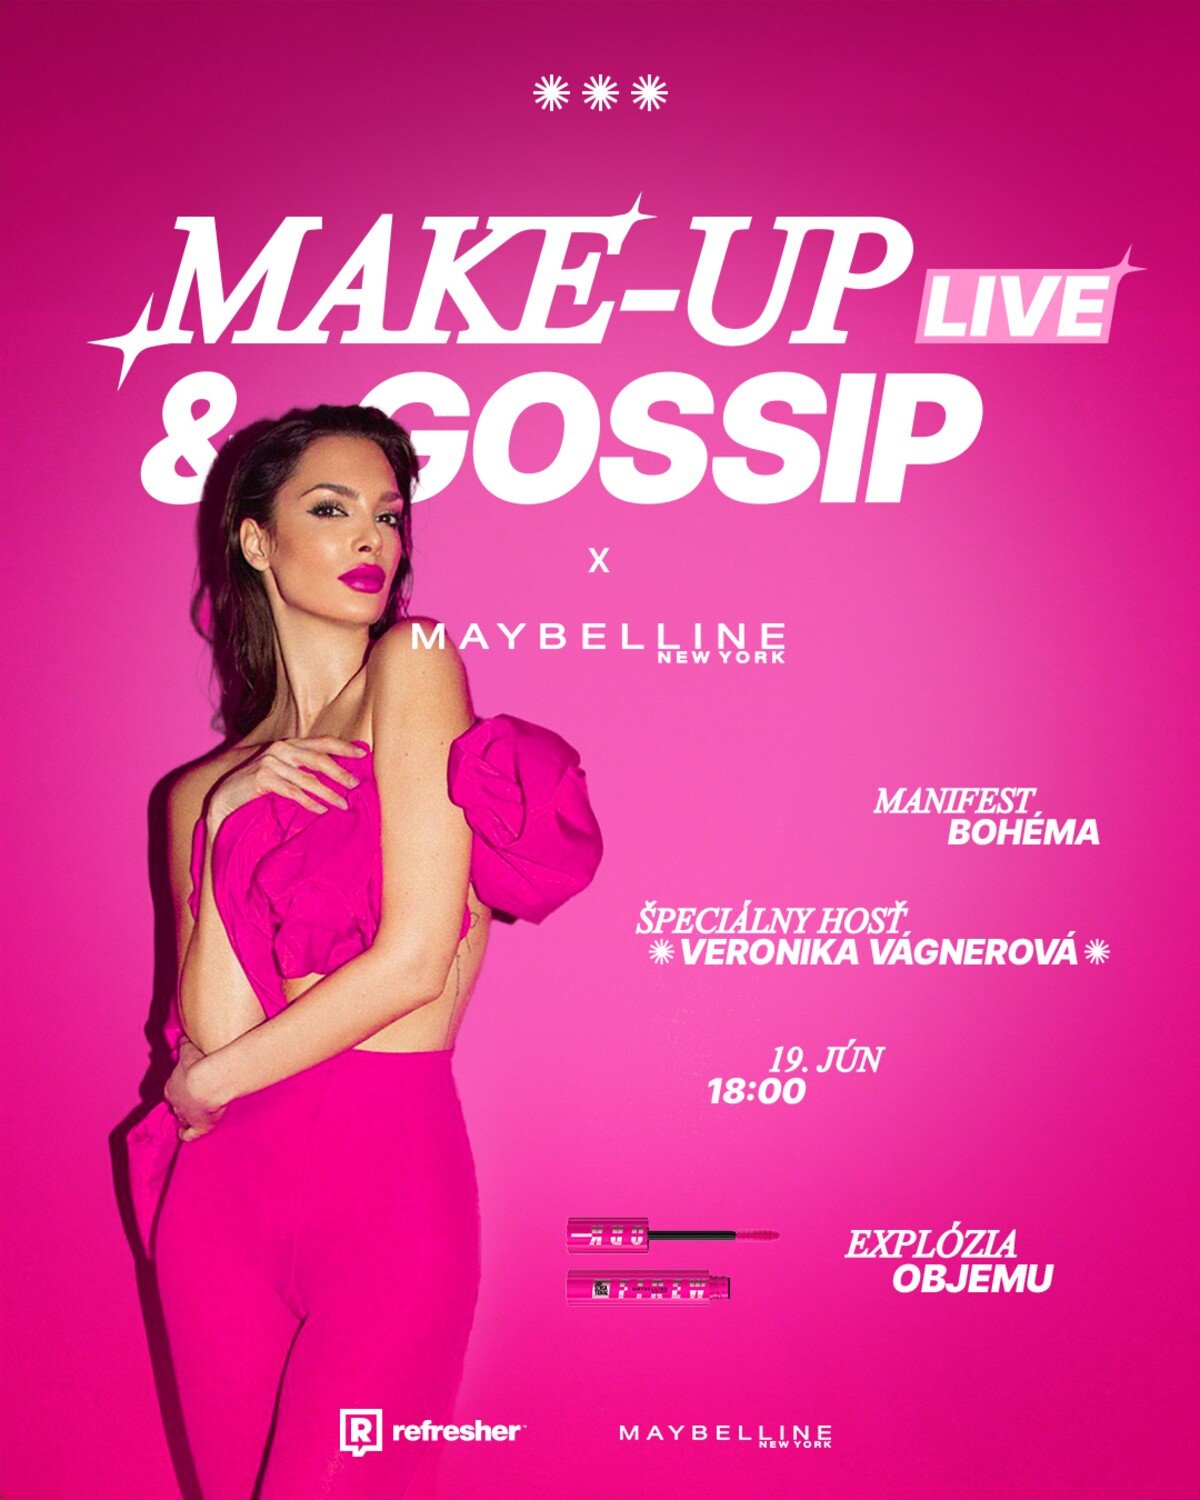 Make-up & gossip live